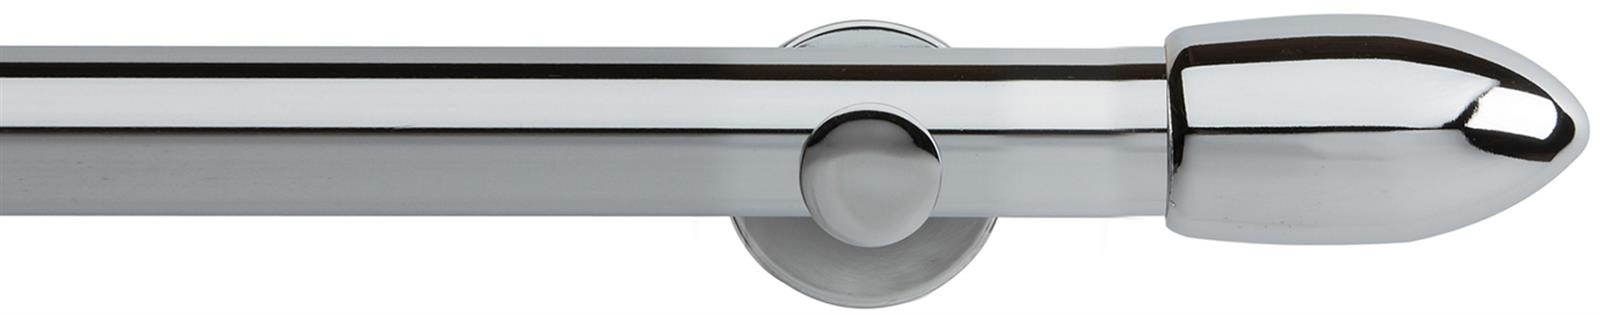 Neo 35mm Eyelet Pole Chrome Bullet